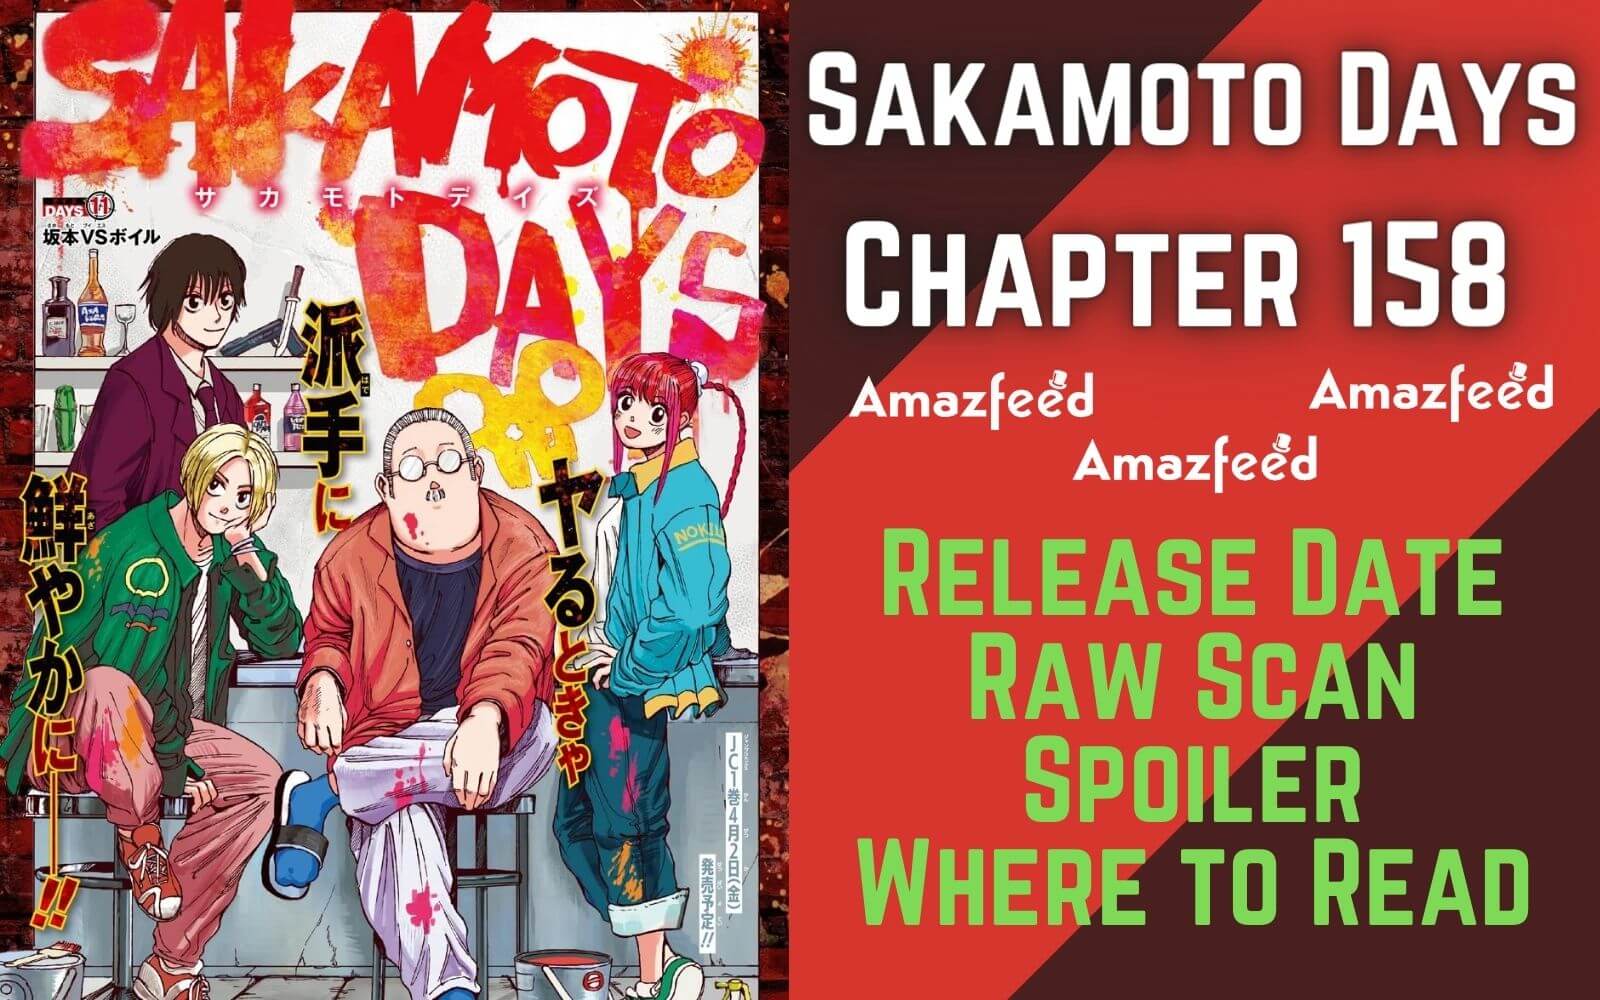 Sakamoto Days Chapter 158 Spoiler, Recap, Raw Scan & Where to Read